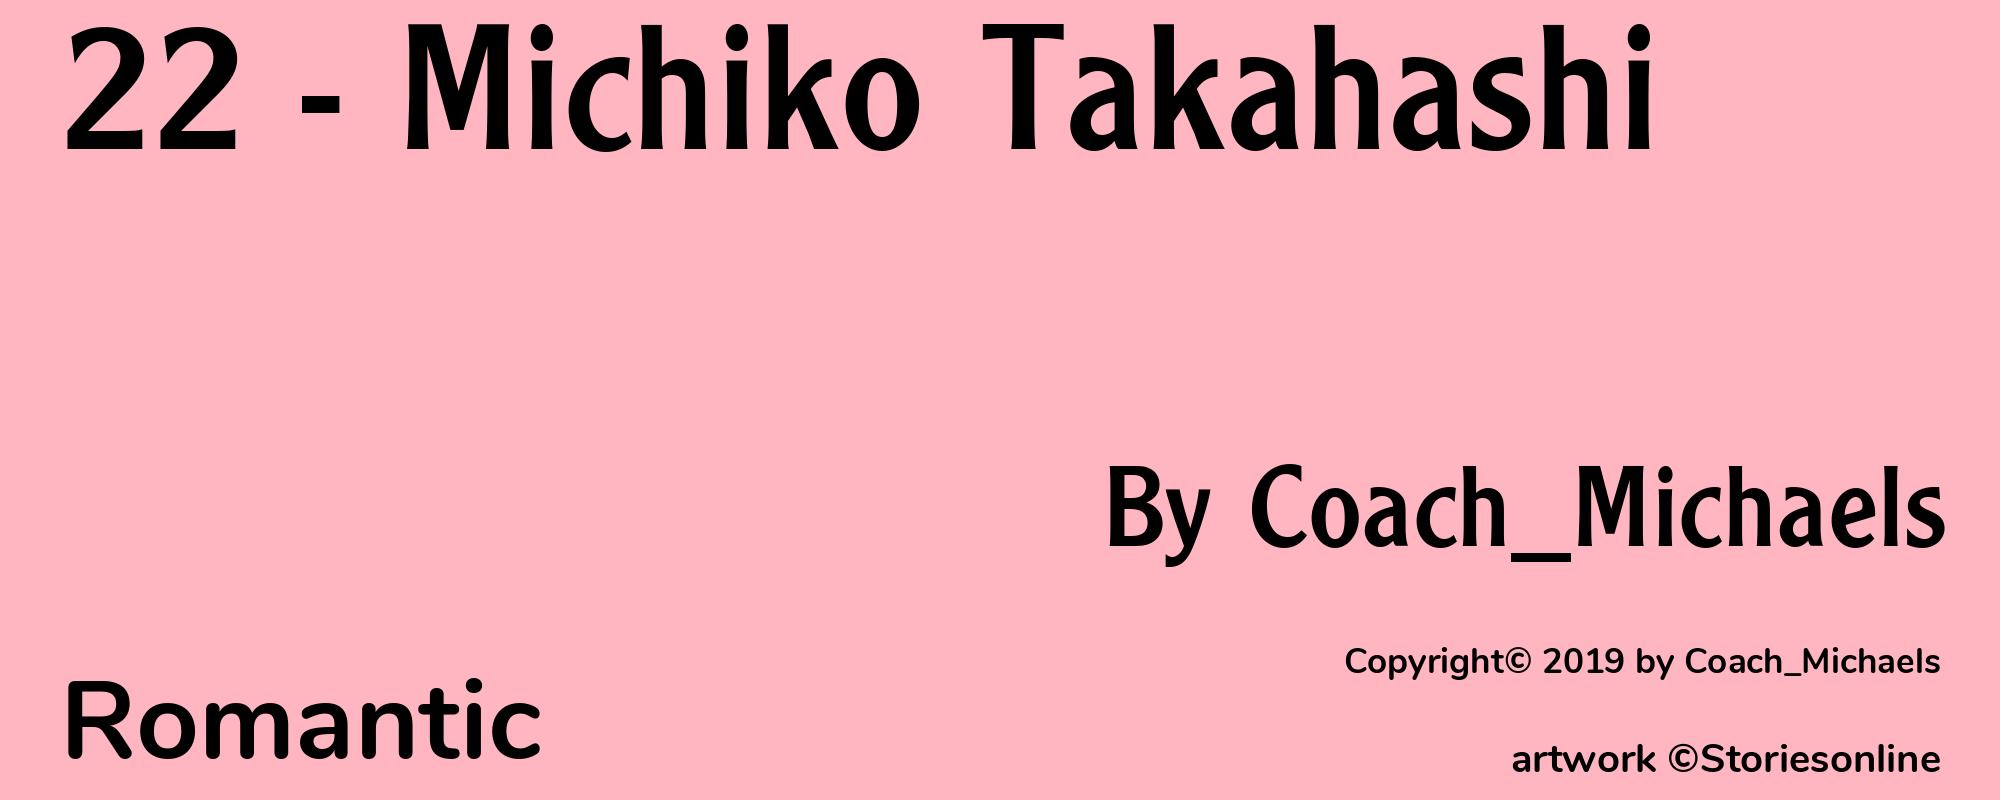 22 - Michiko Takahashi - Cover